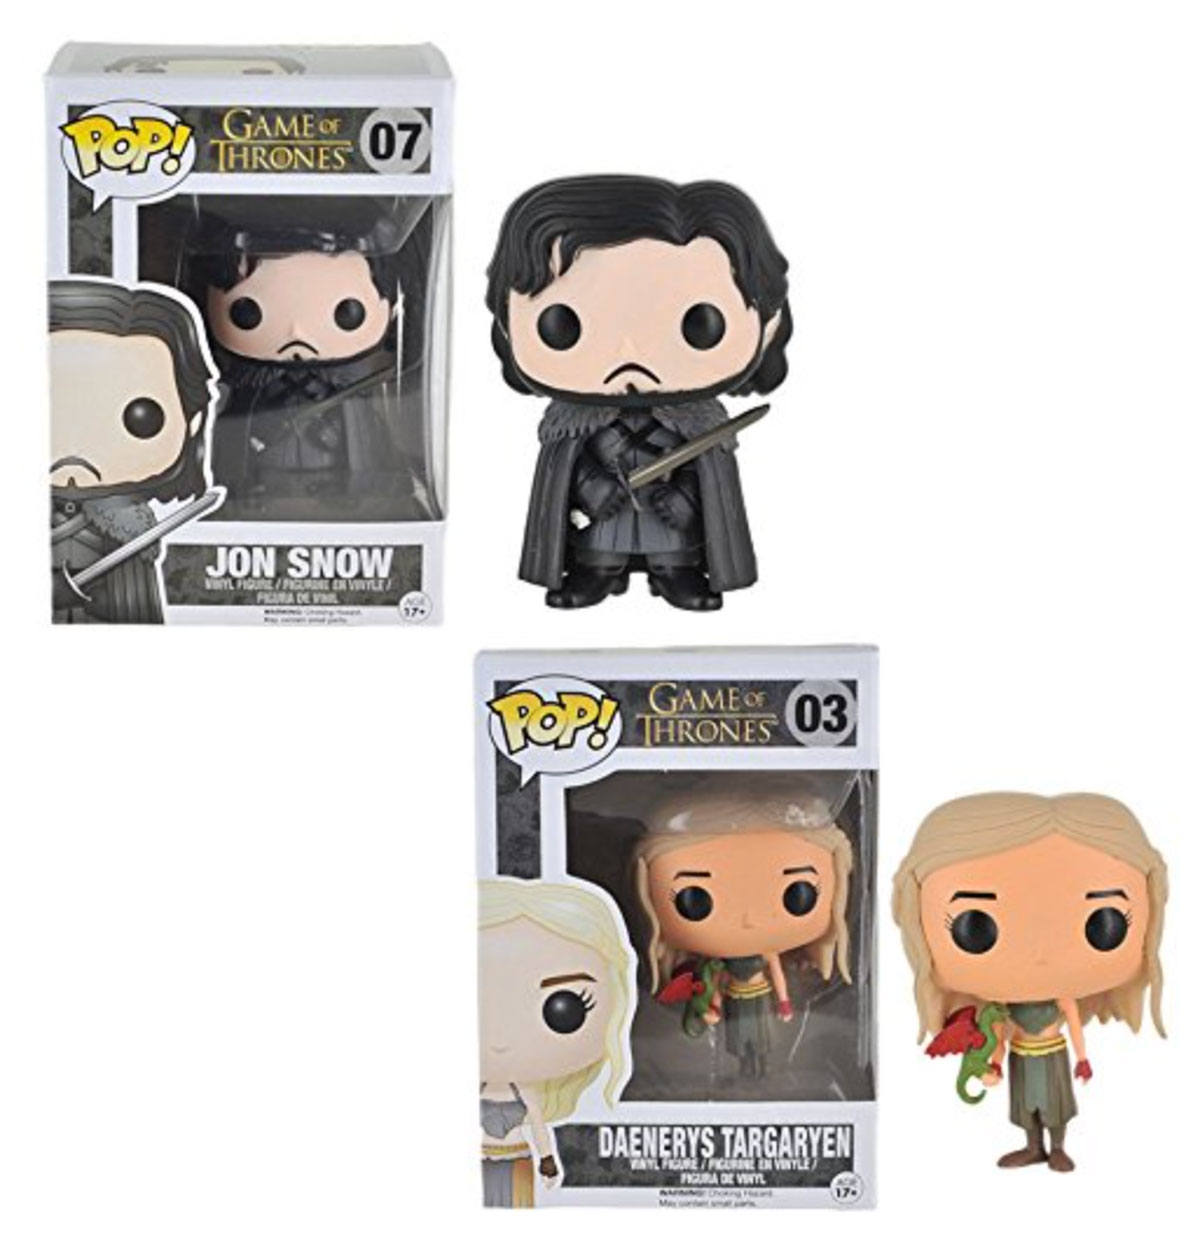 Game of Thrones Pop Vinyl Figure Bundle Set: Daenerys Targaryen and Jon Snow